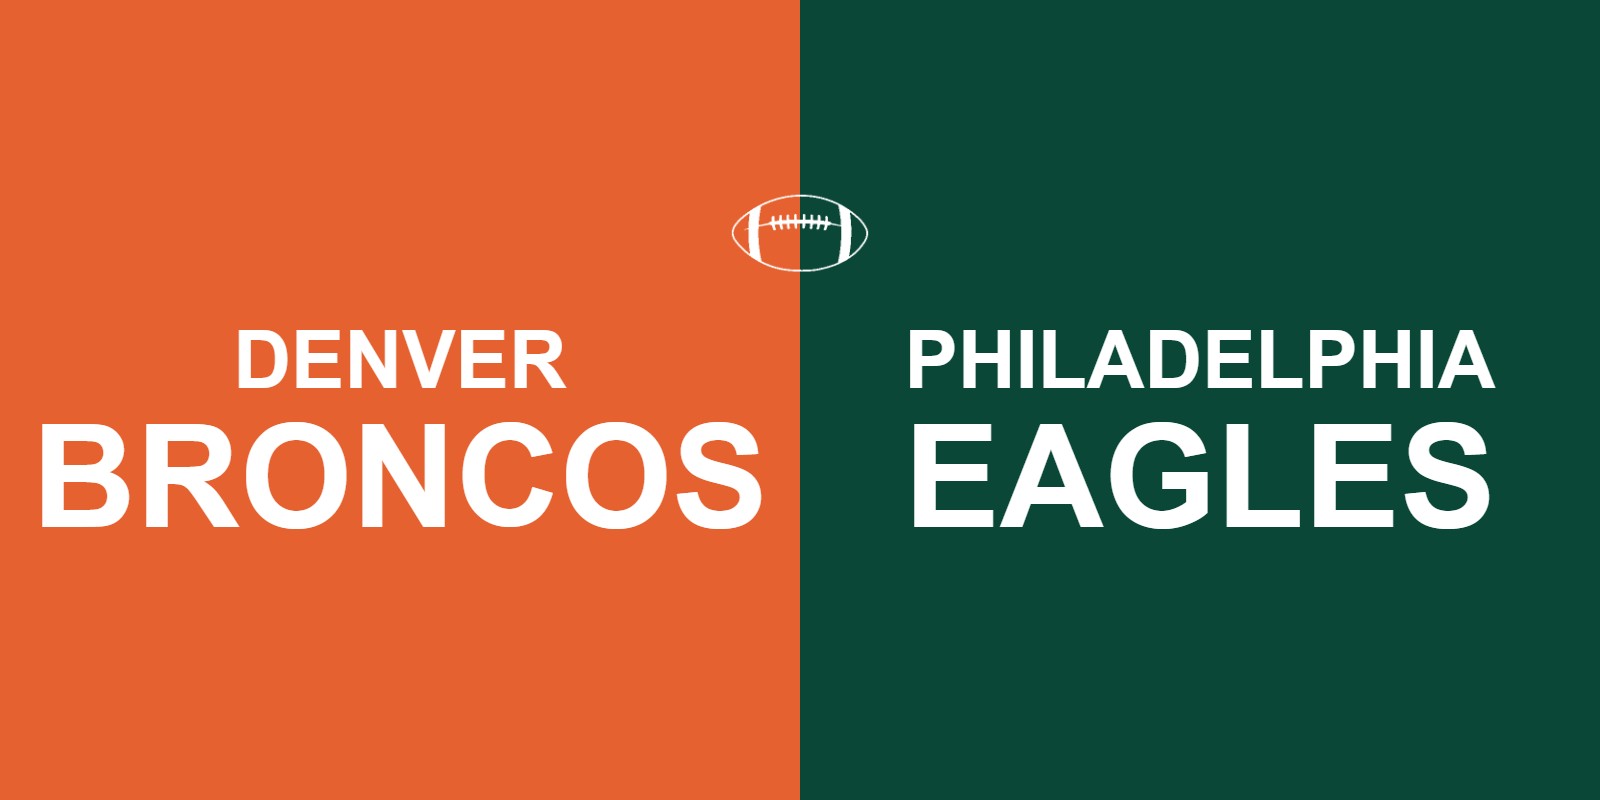 Broncos vs Eagles